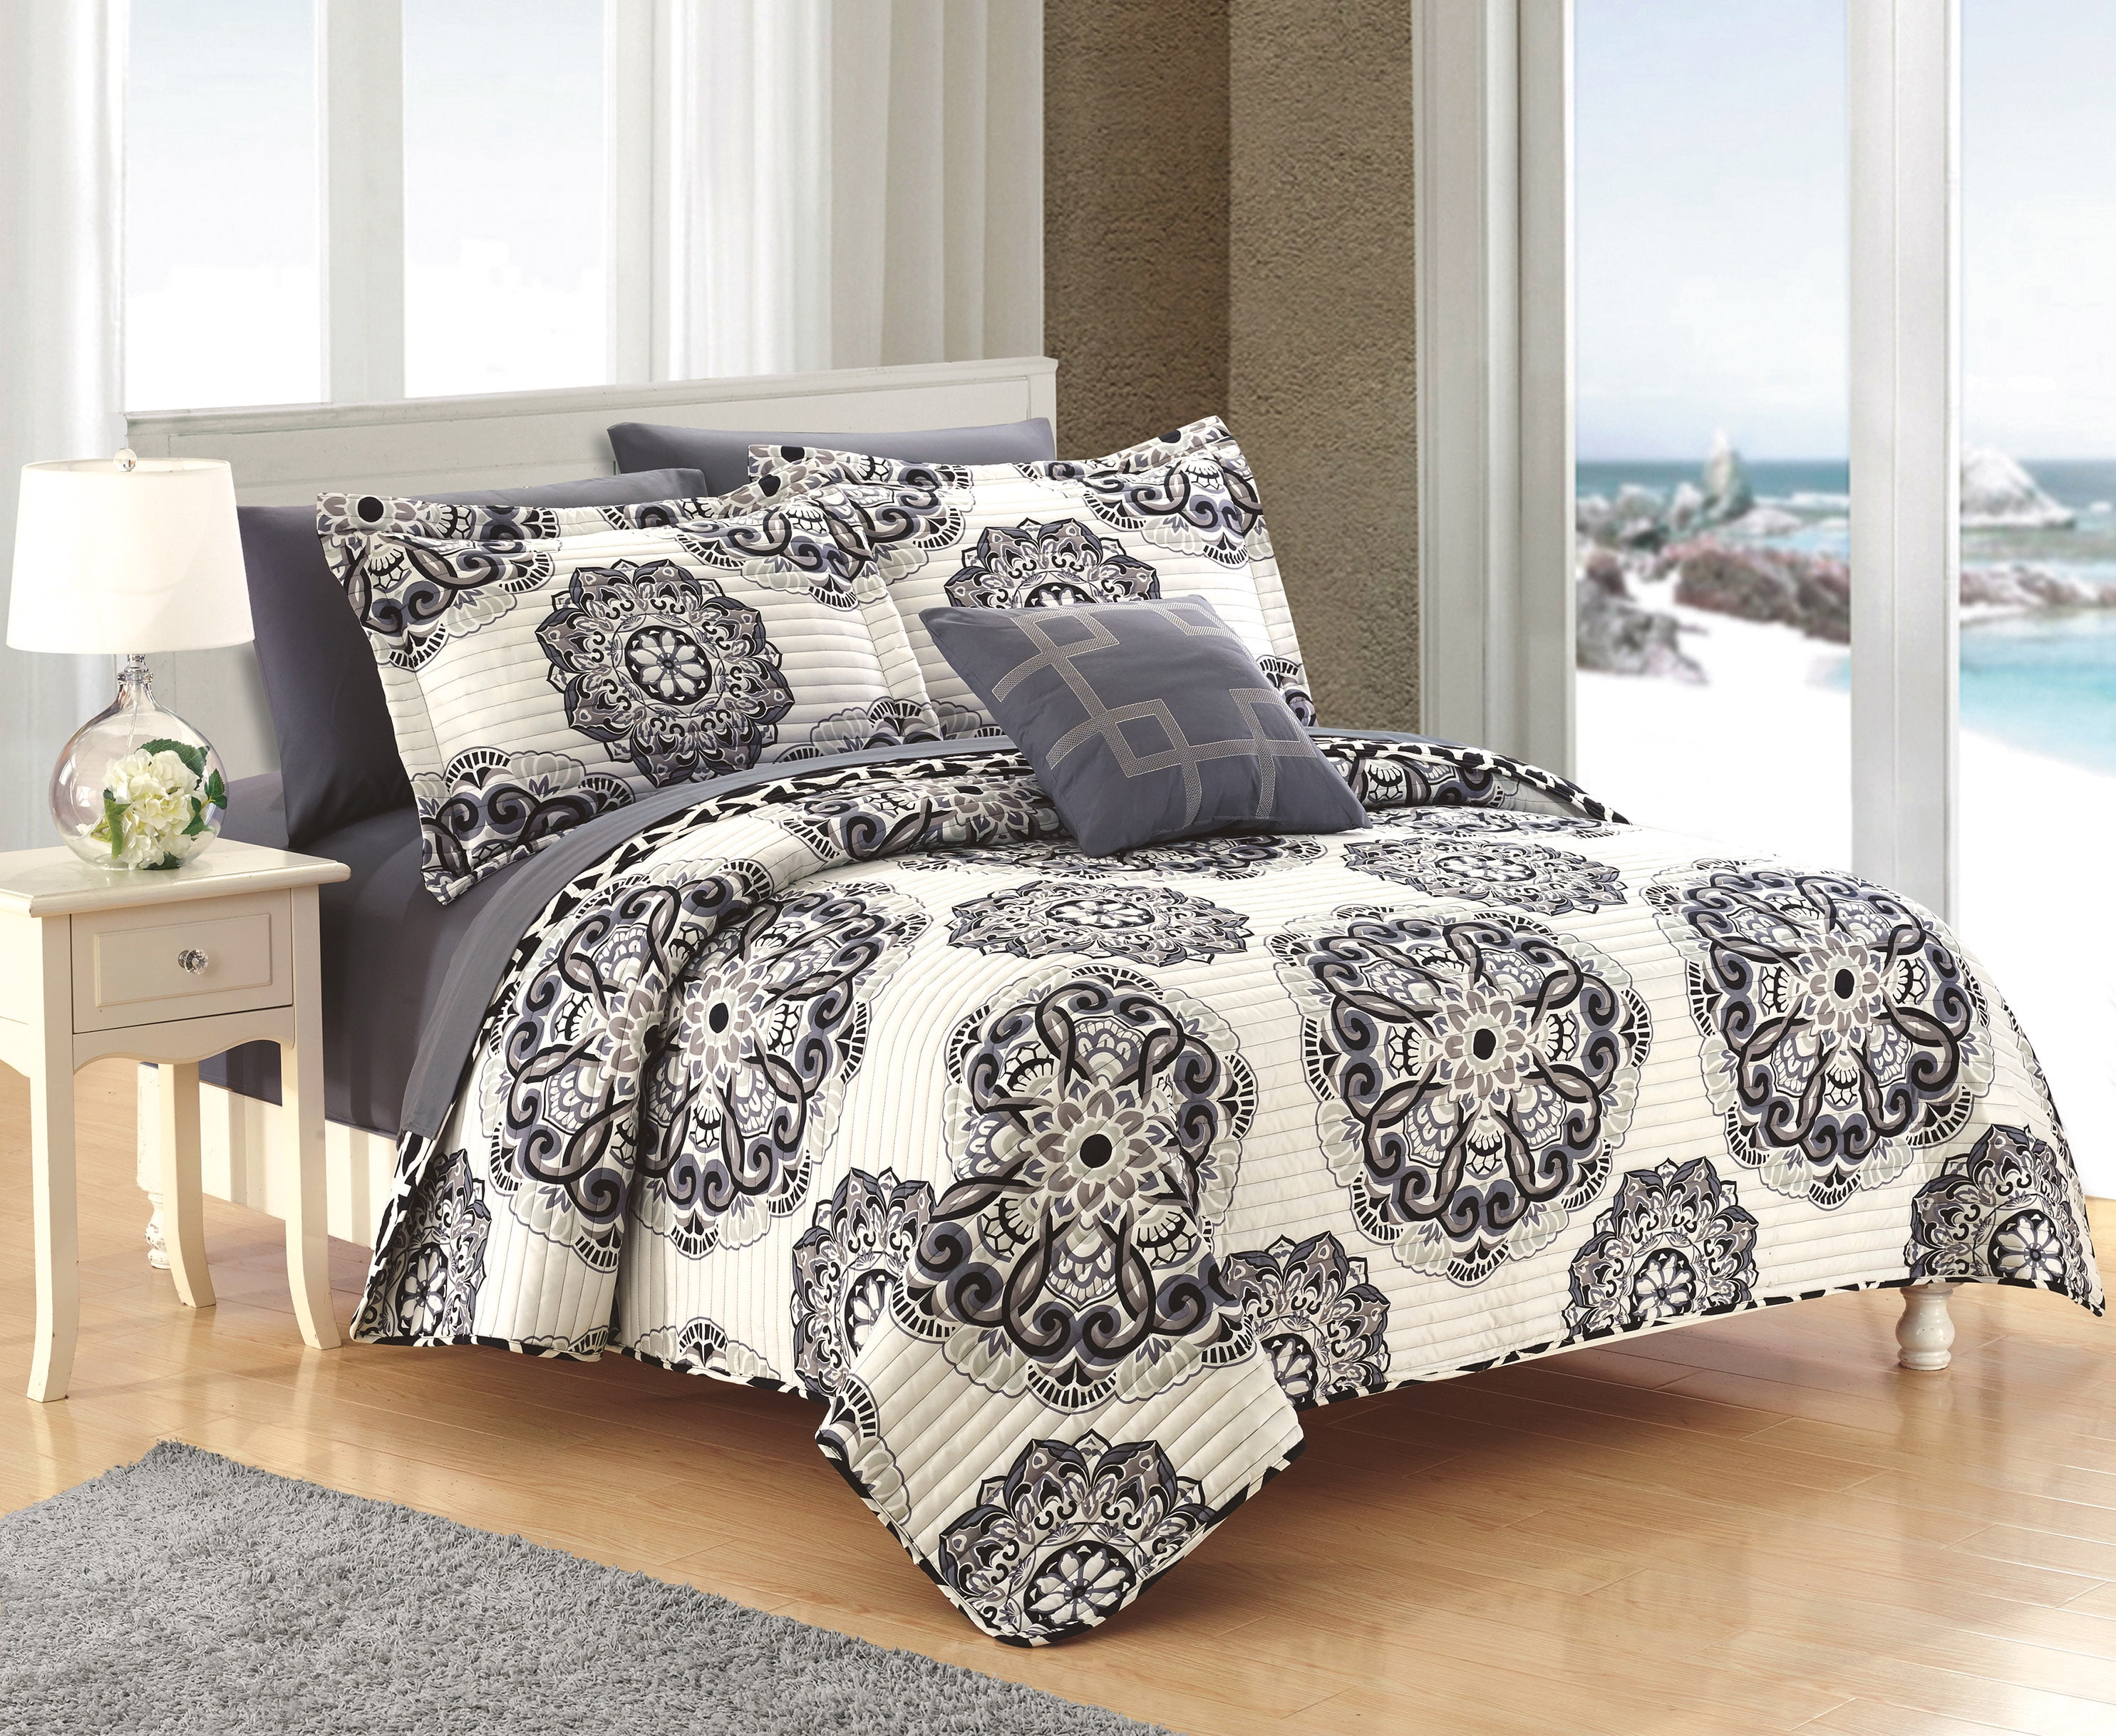 230x230 CM Queen Size Reversible Flower Winter Quilt Comforter Duvet 2 type X9O7 